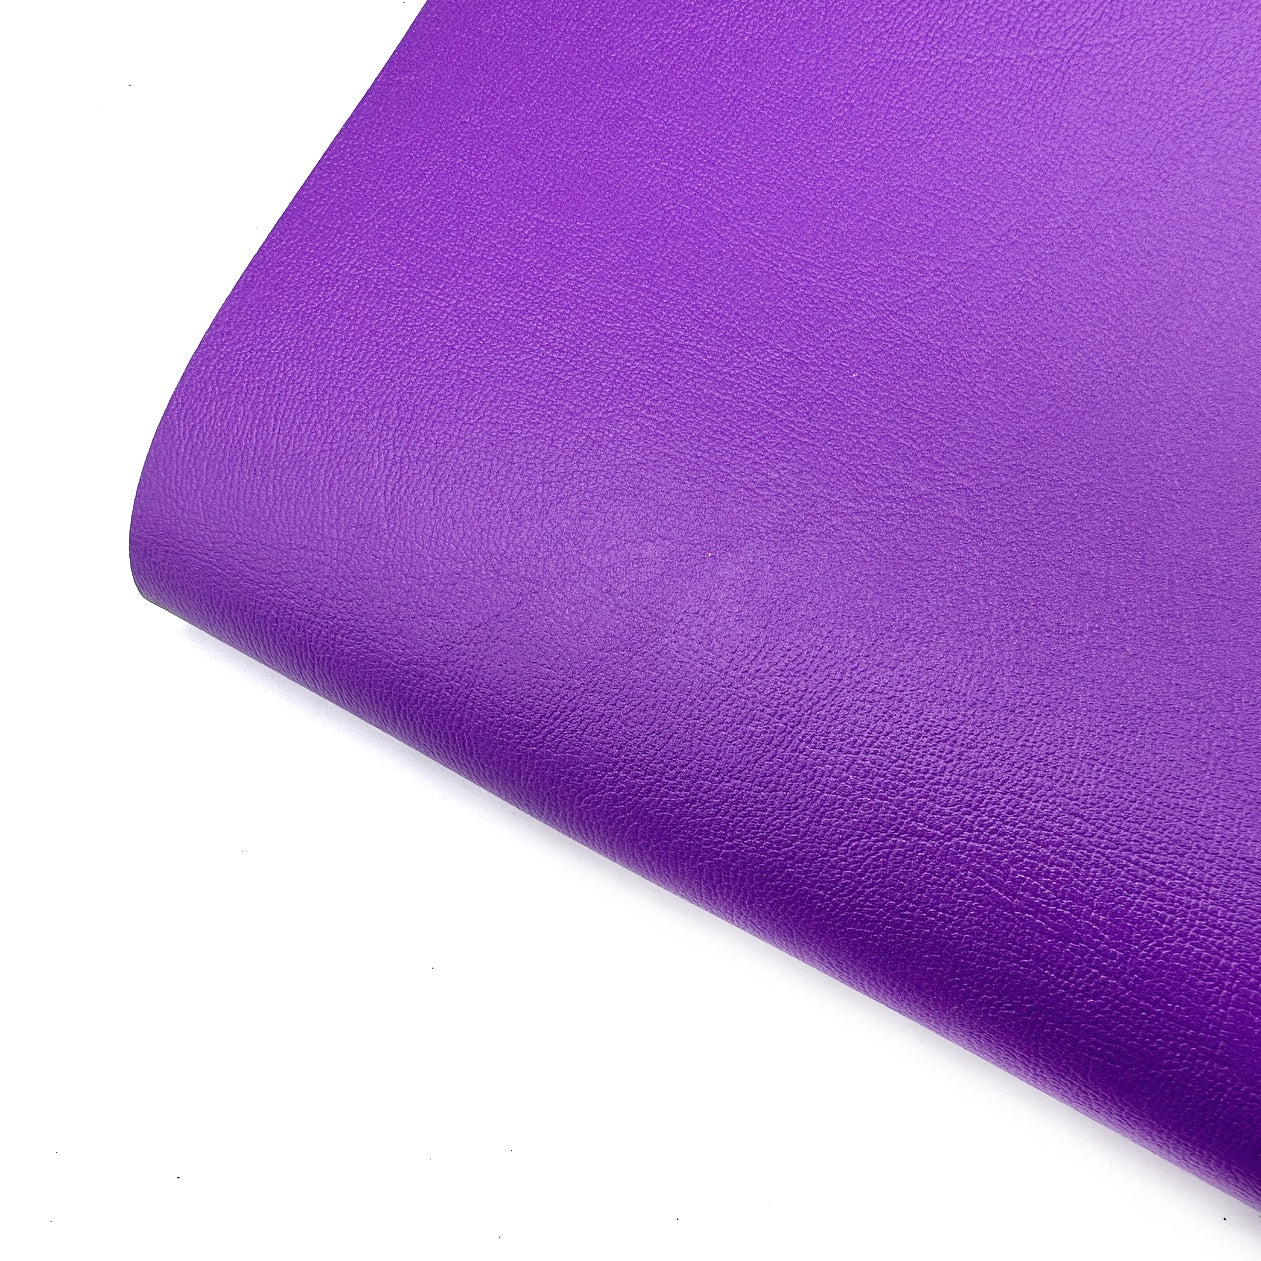 Sea Witch Core Colour Premium Faux Leather Fabric Sheets